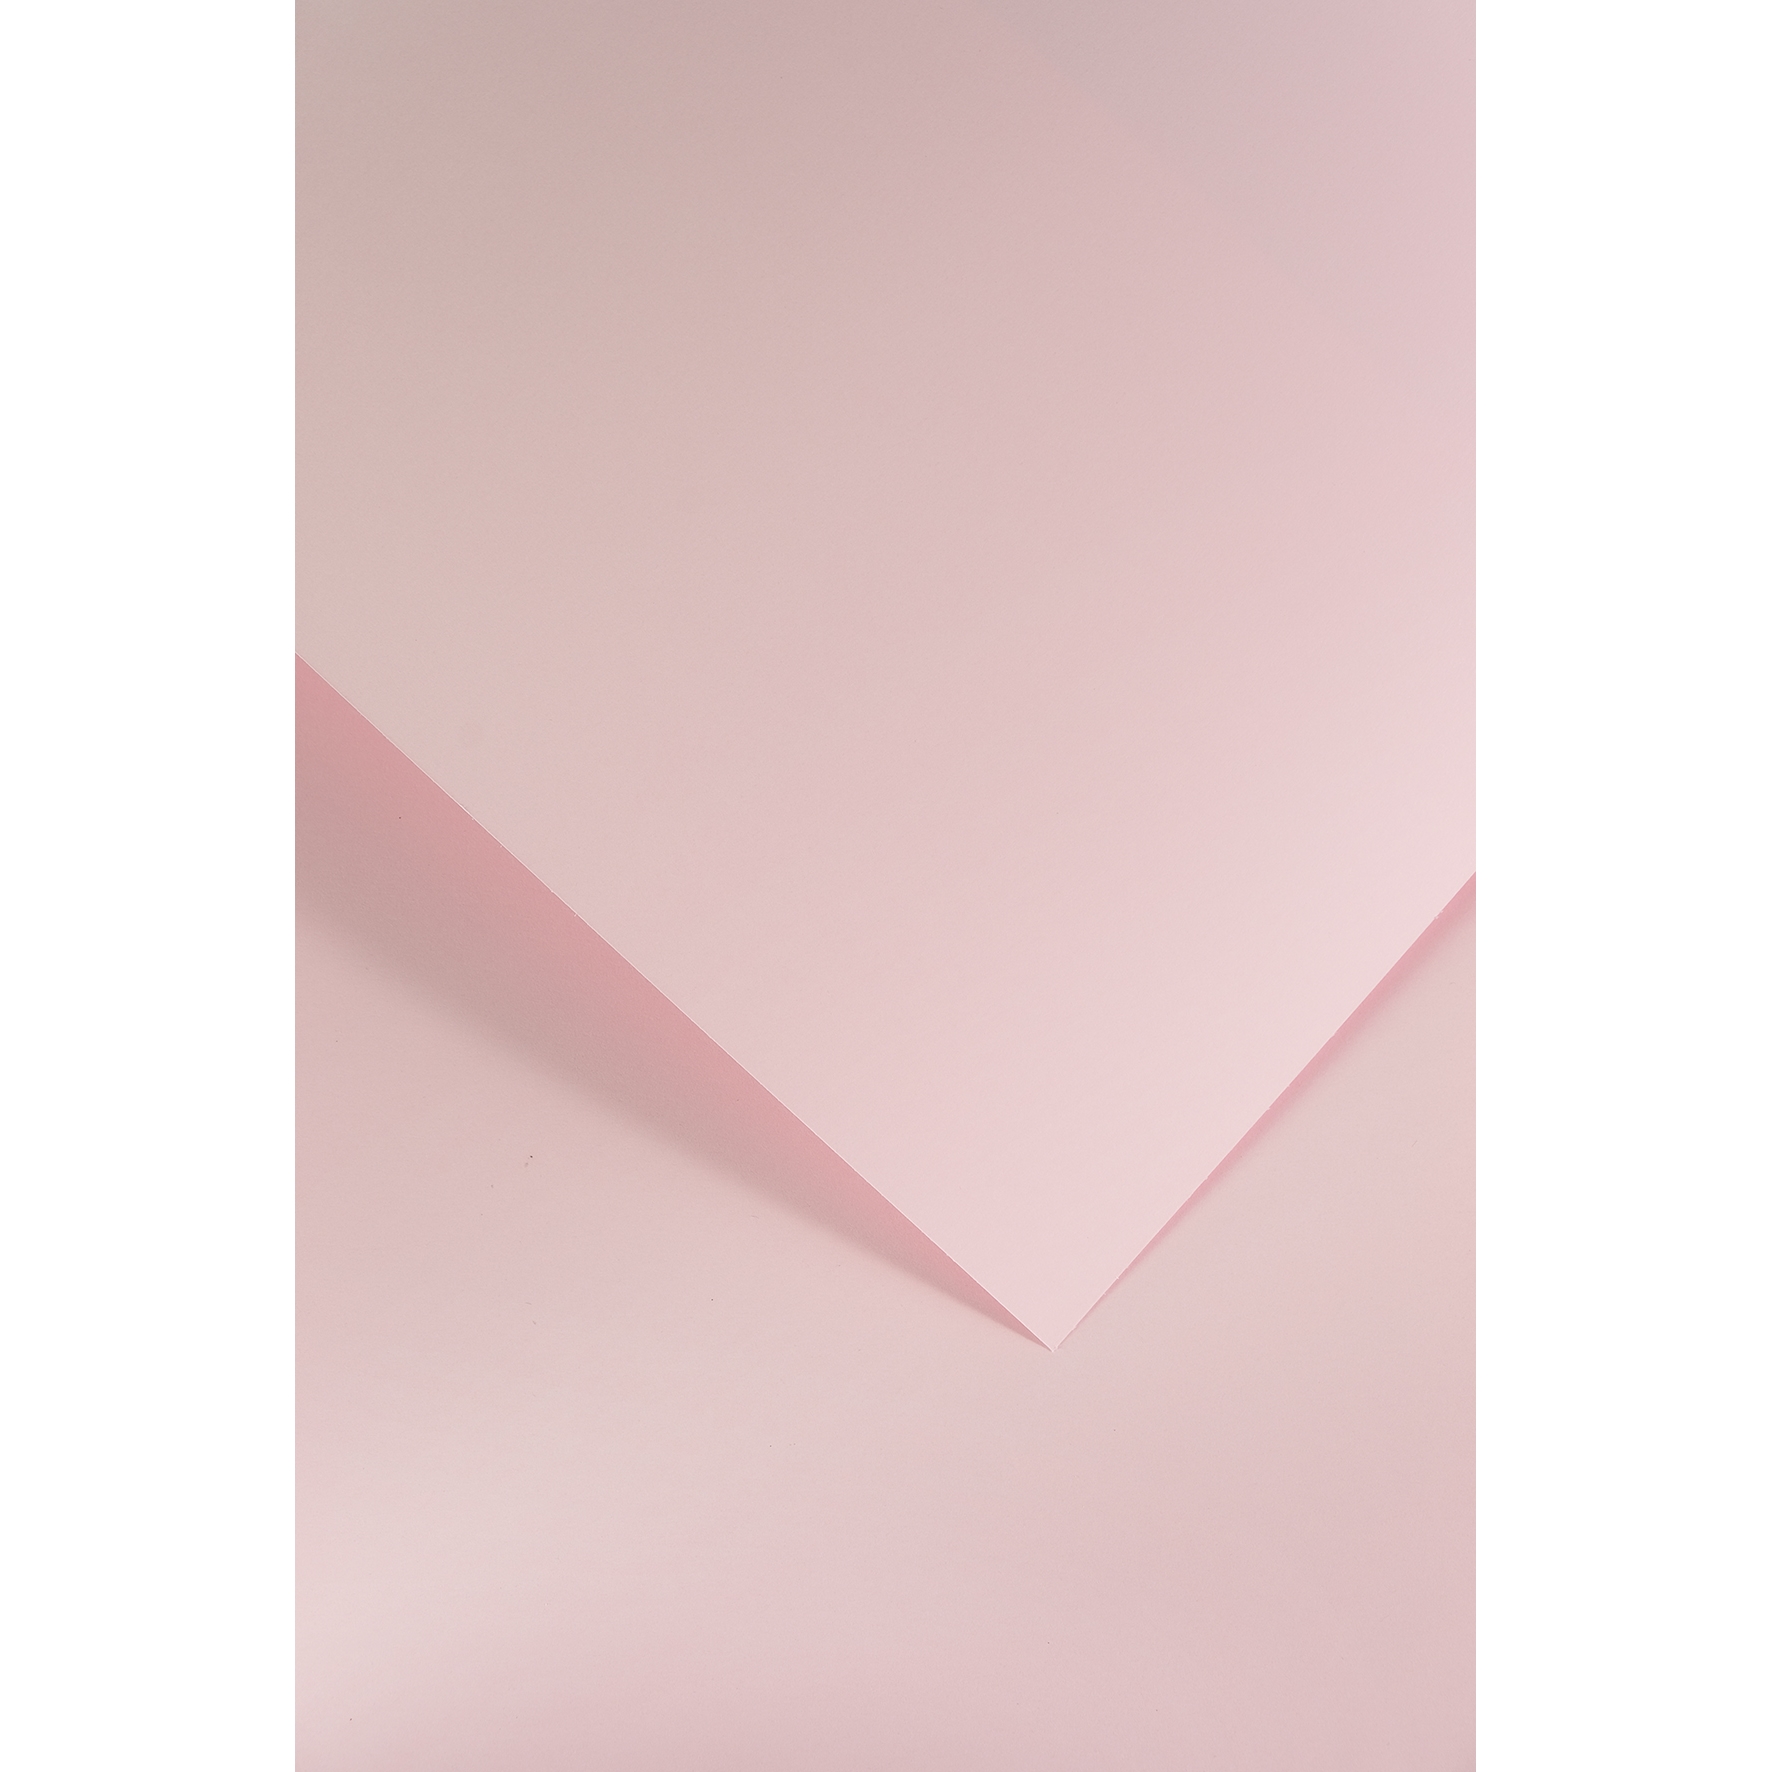 Ozdobný papír Hladký růžová 210g, 20ks